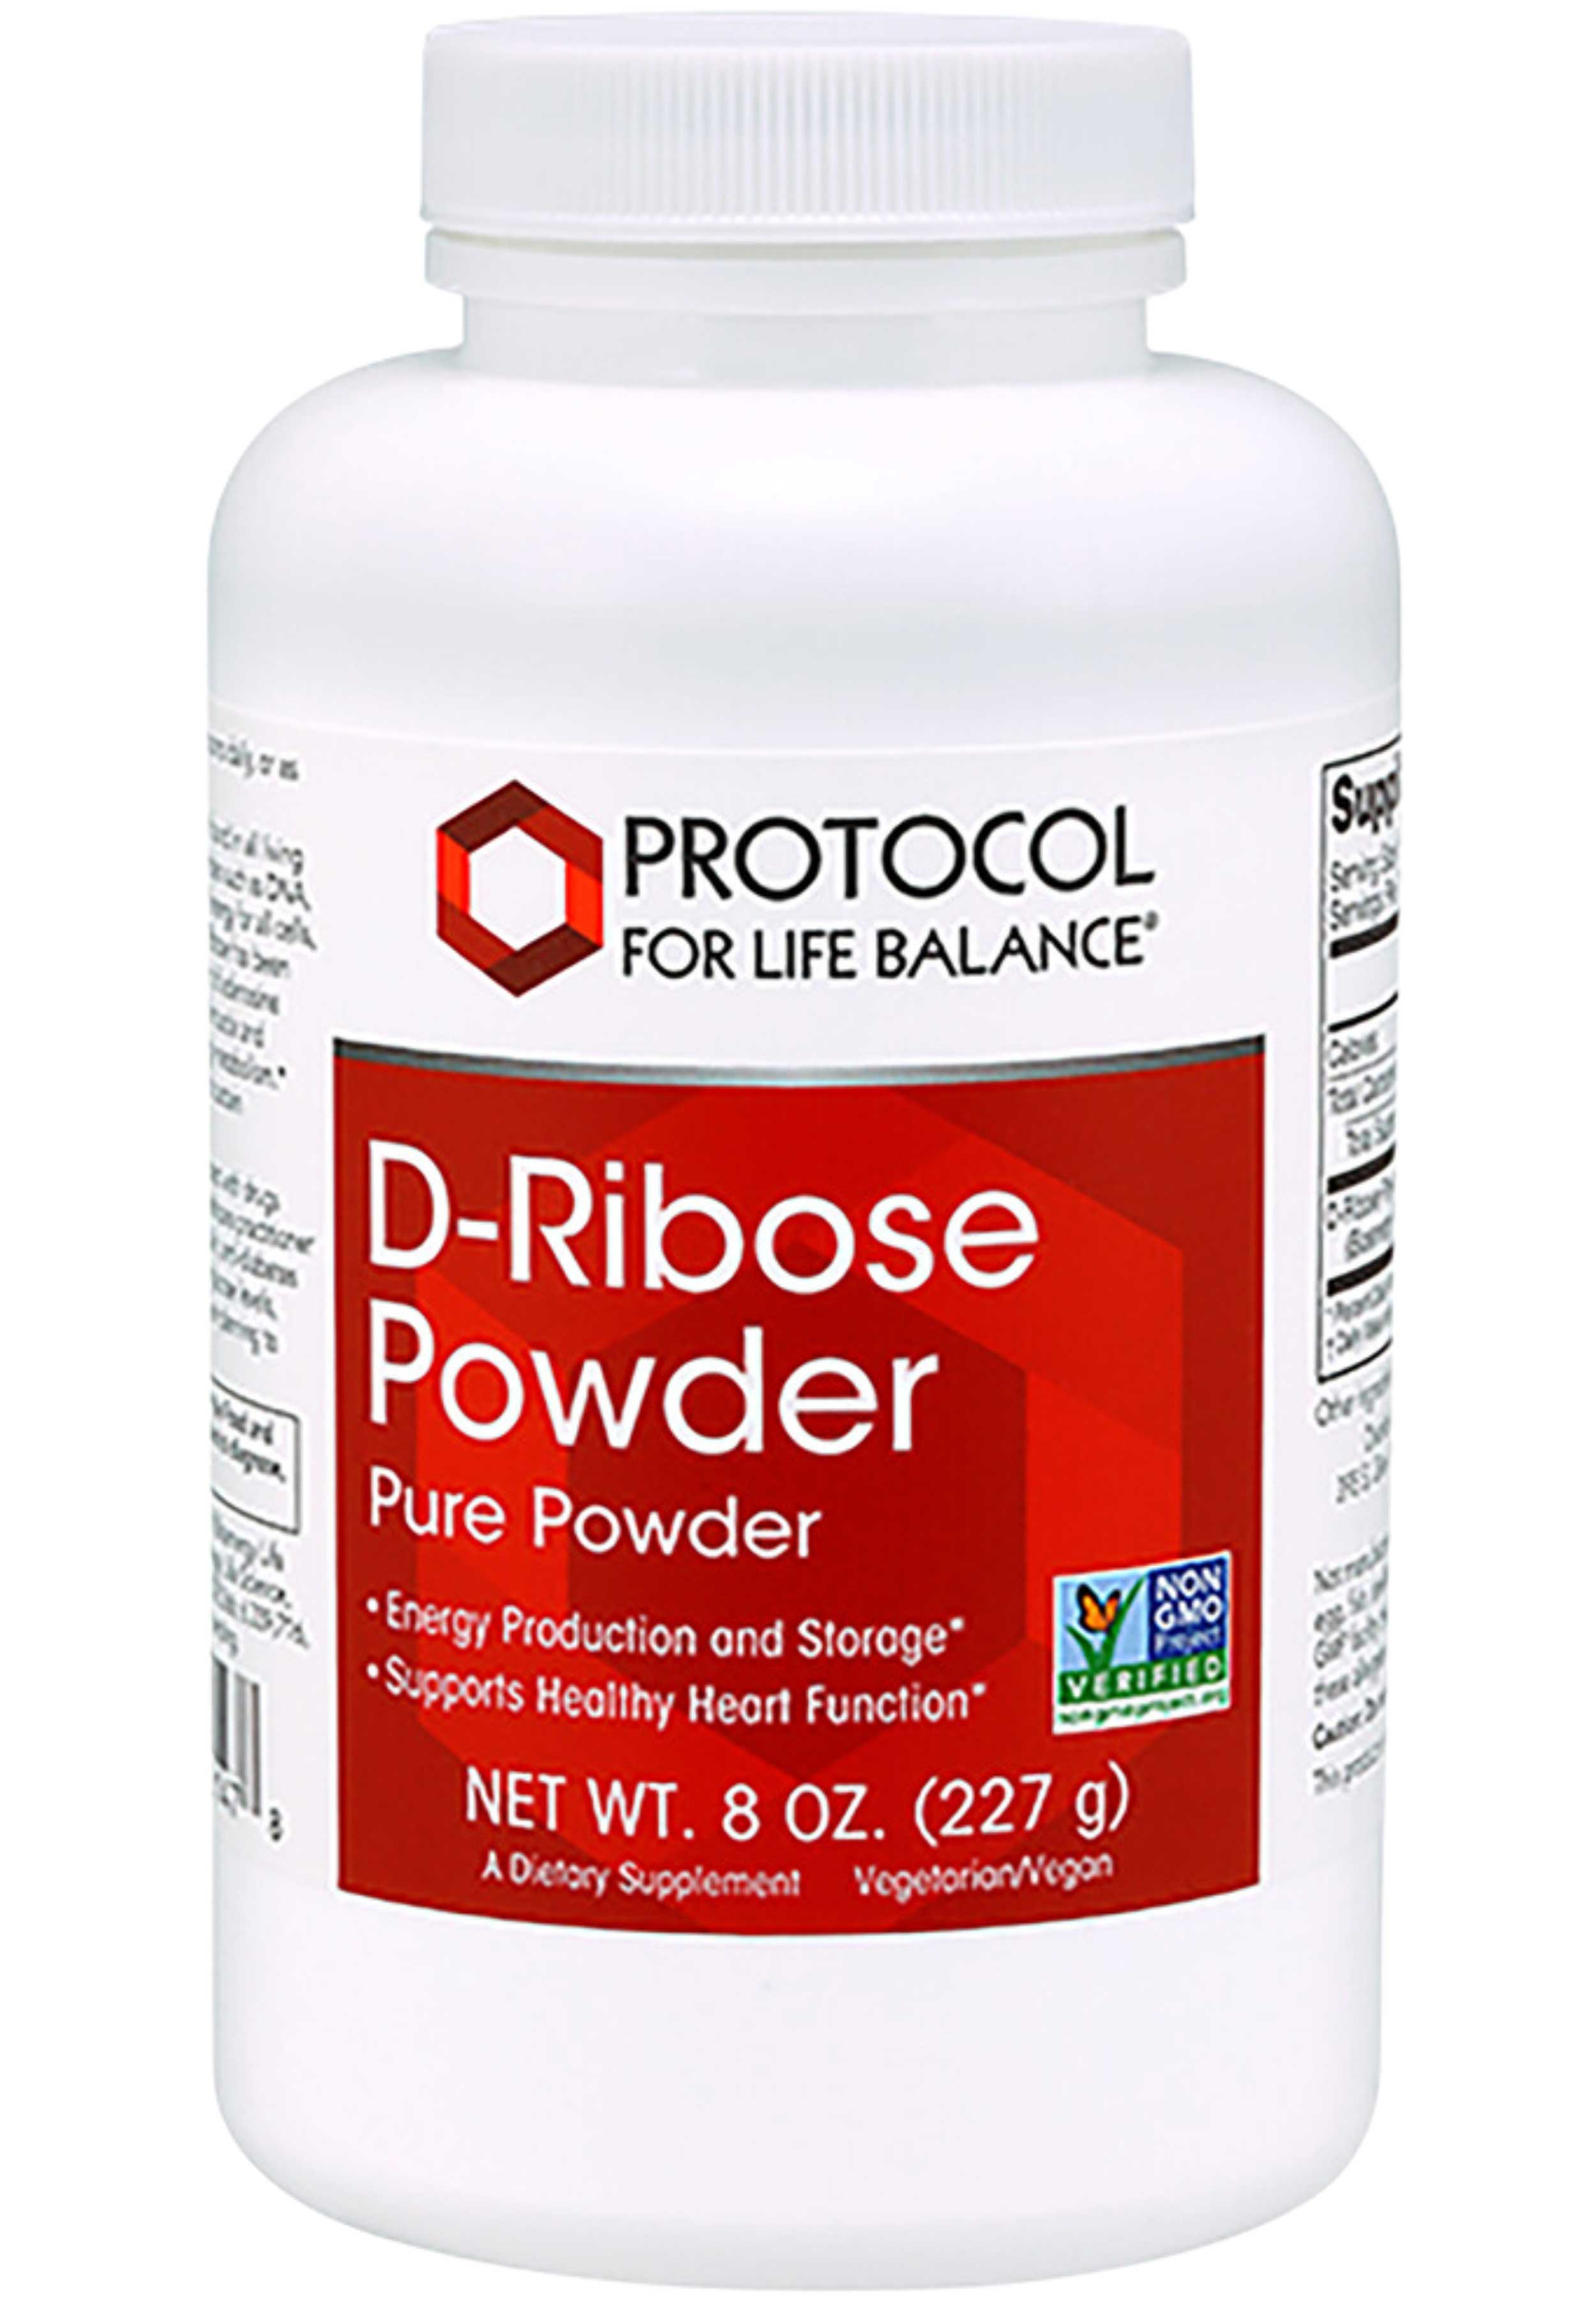 Protocol for Life Balance D-Ribose Pure Powder